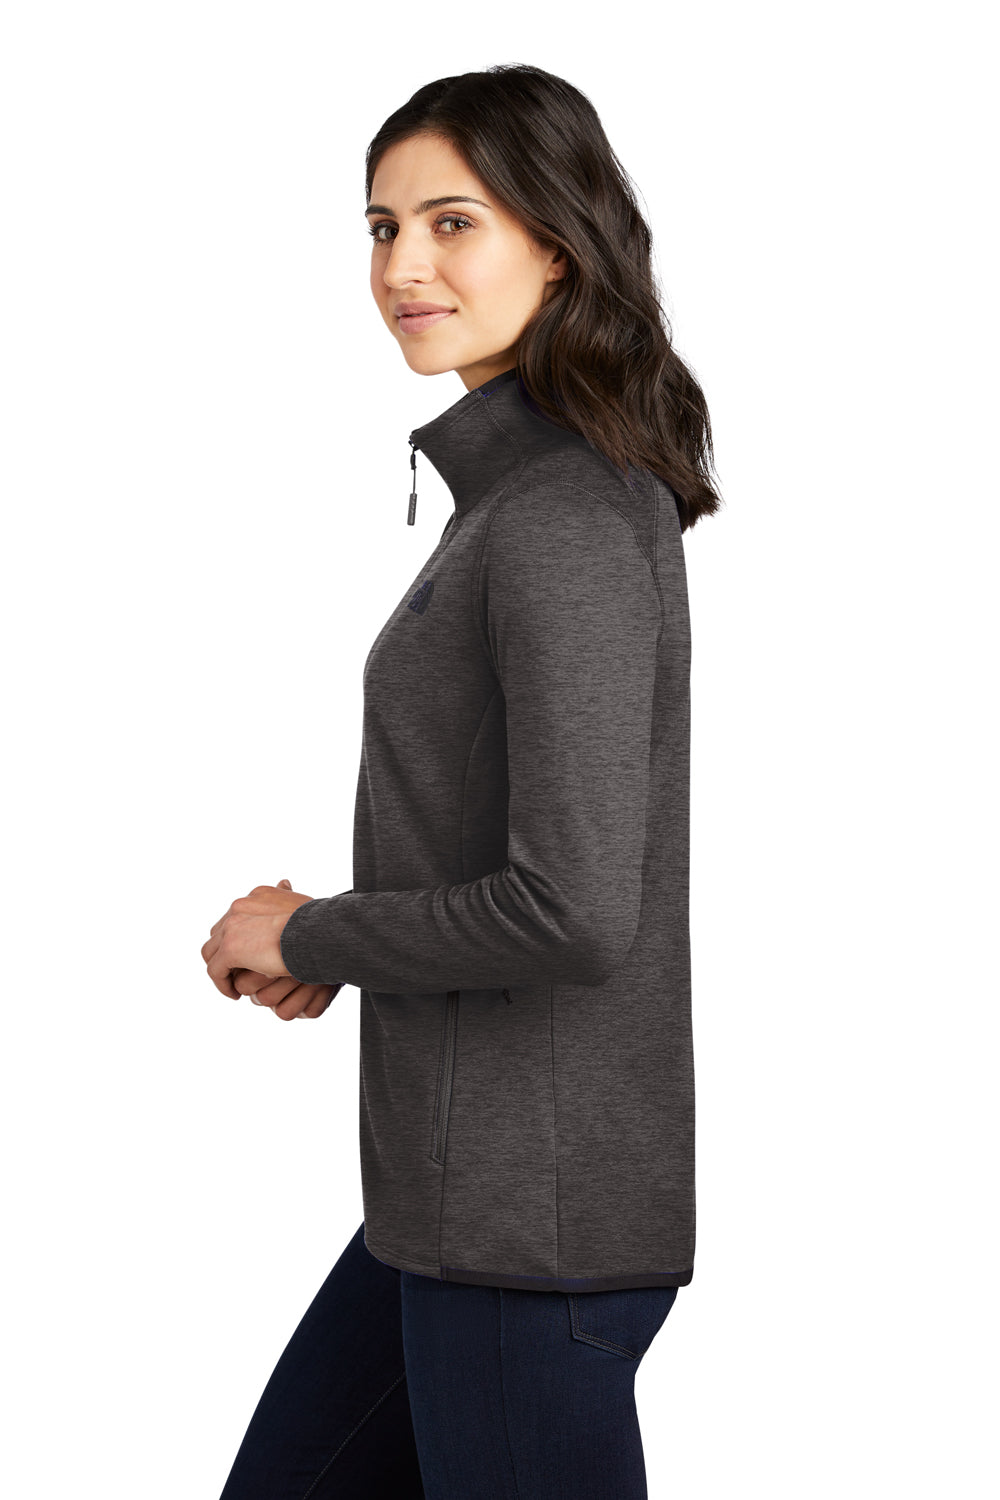 The North Face NF0A7V62 Womens Skyline Full Zip Fleece Jacket Heather Dark Grey Side